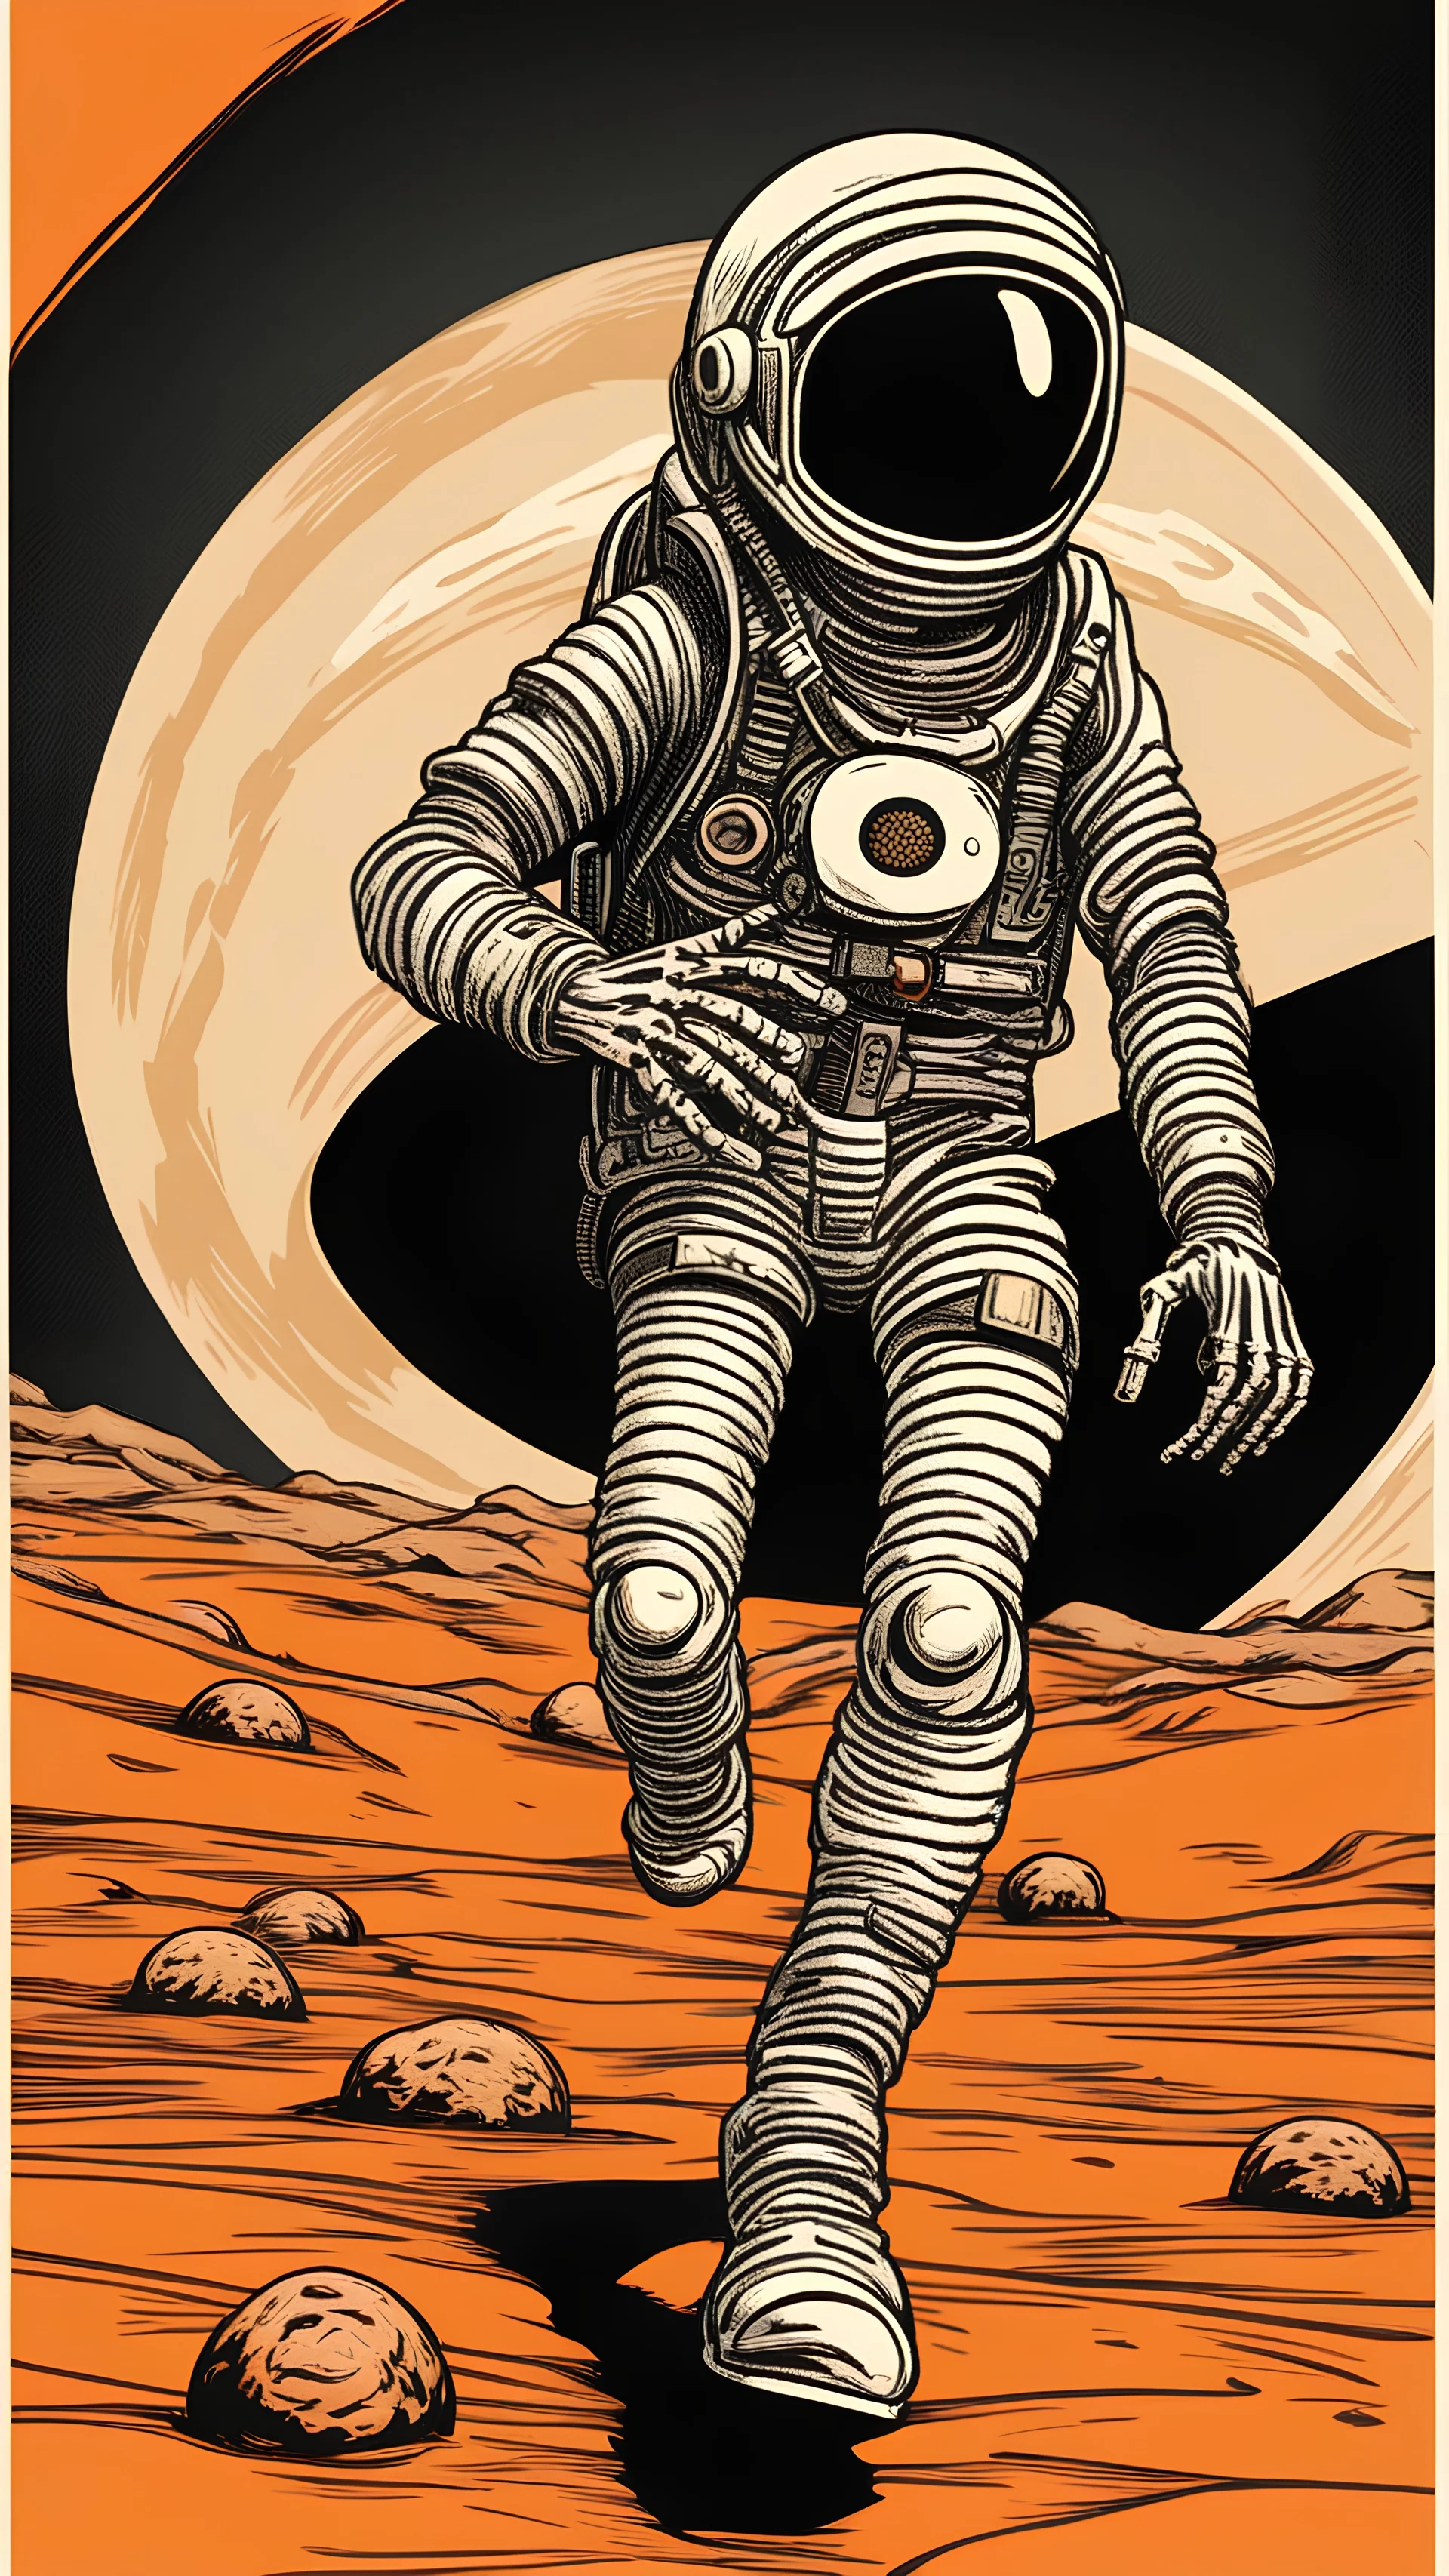 skeleton astronaut walking on an orange planet, retro comic, jack kirby style